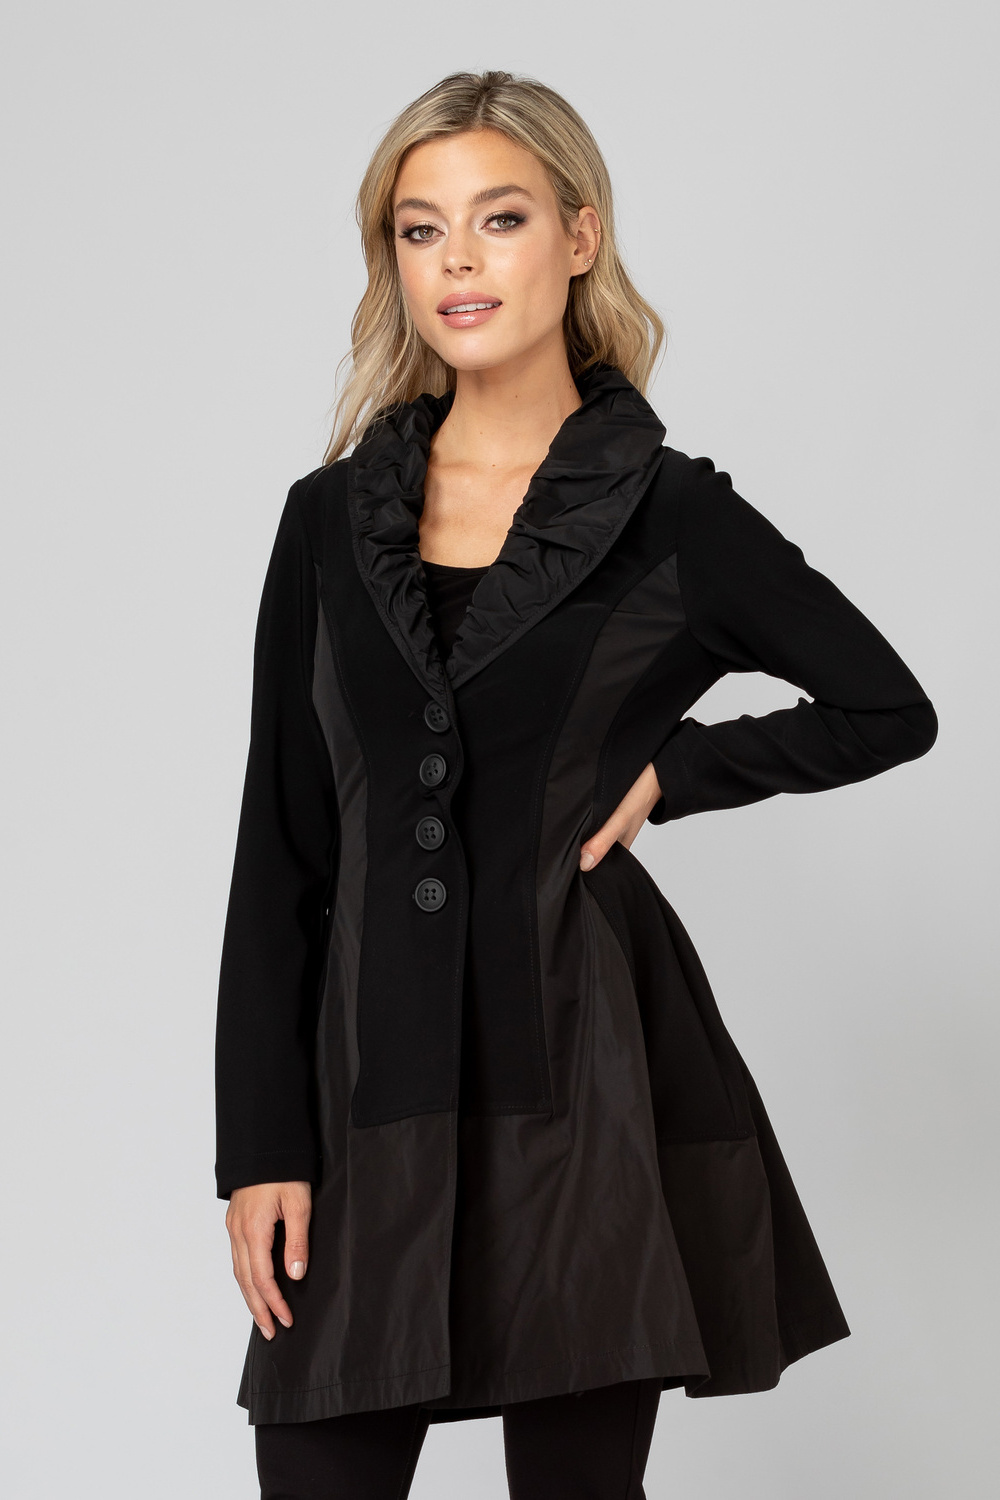 Joseph Ribkoff coat style 193425. Black